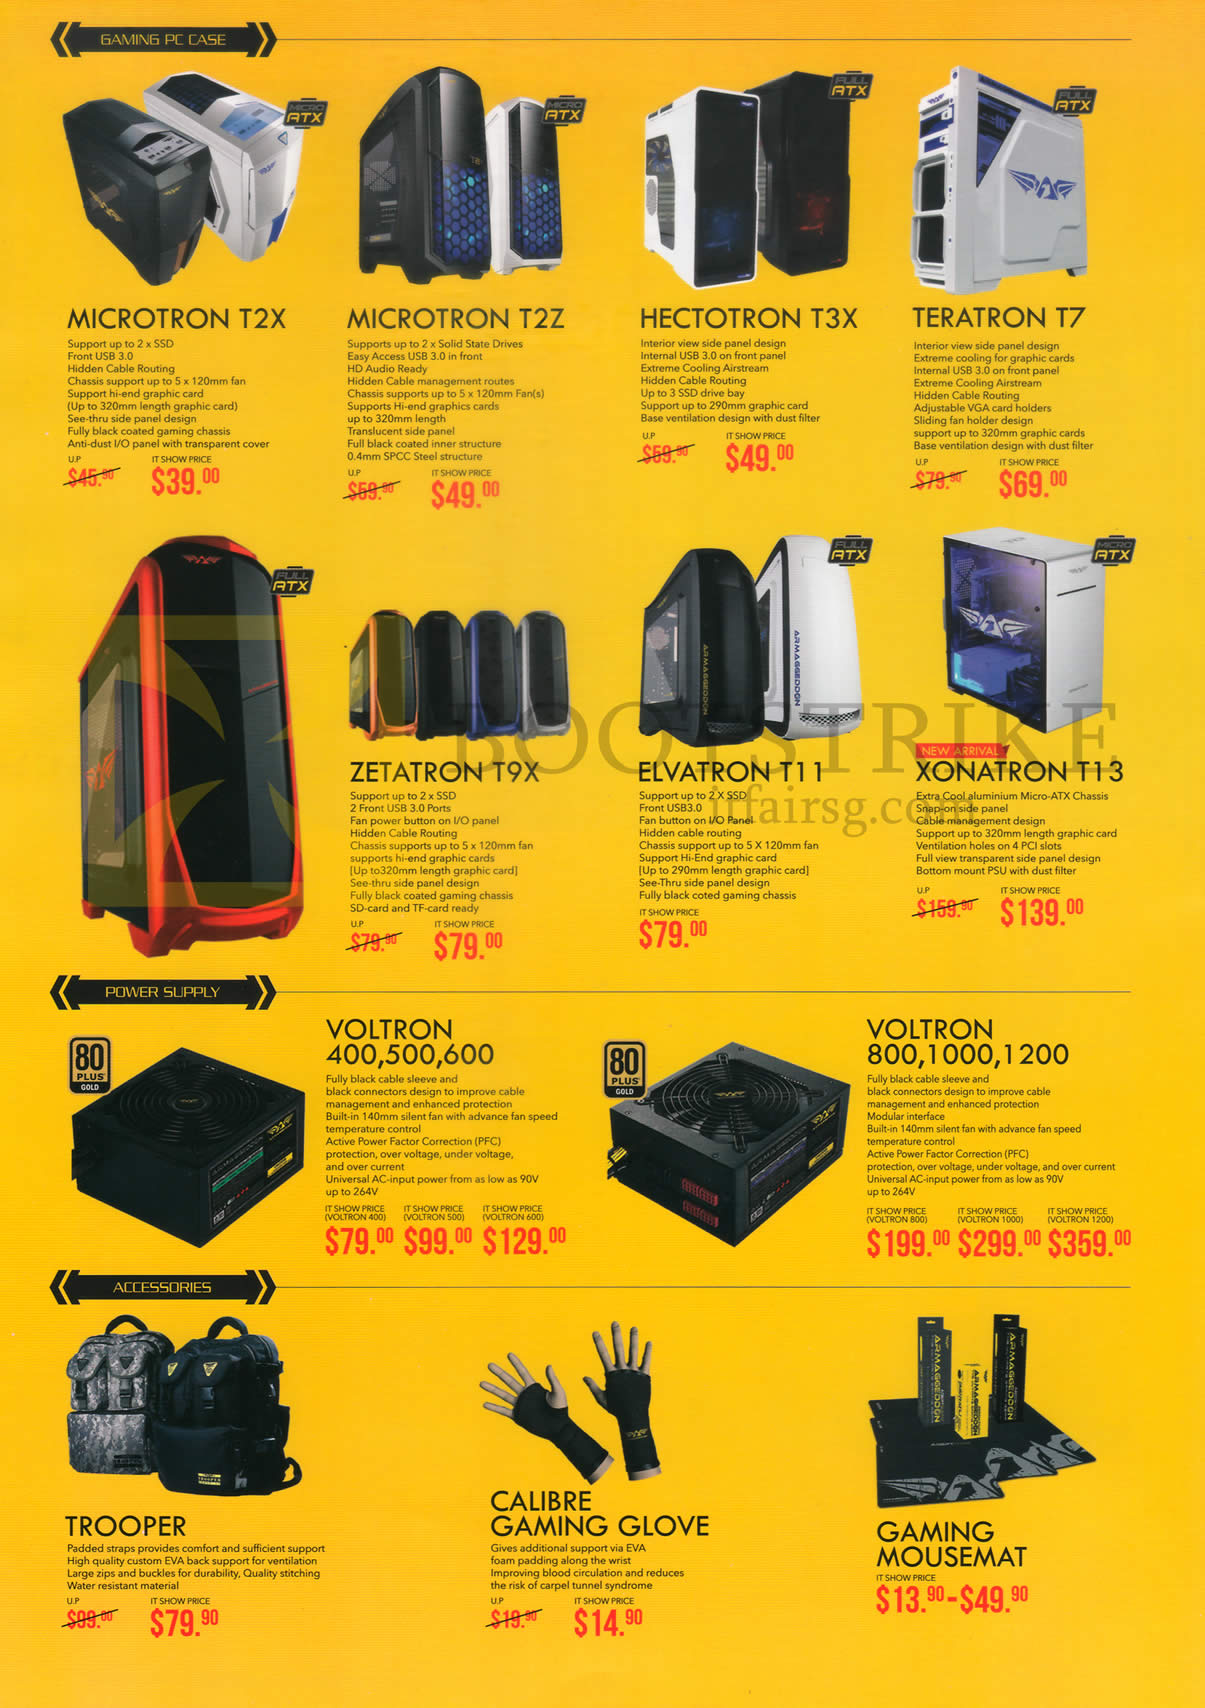 IT SHOW 2016 price list image brochure of Armageddon Gaming PC Case, Power Supply, Accessories, Microtron T2X, T2Z, Hectotron T3X, Teratron T7, Zetatron T9X, Elvatron T11, Xonatron T13, Voltron, Trooper